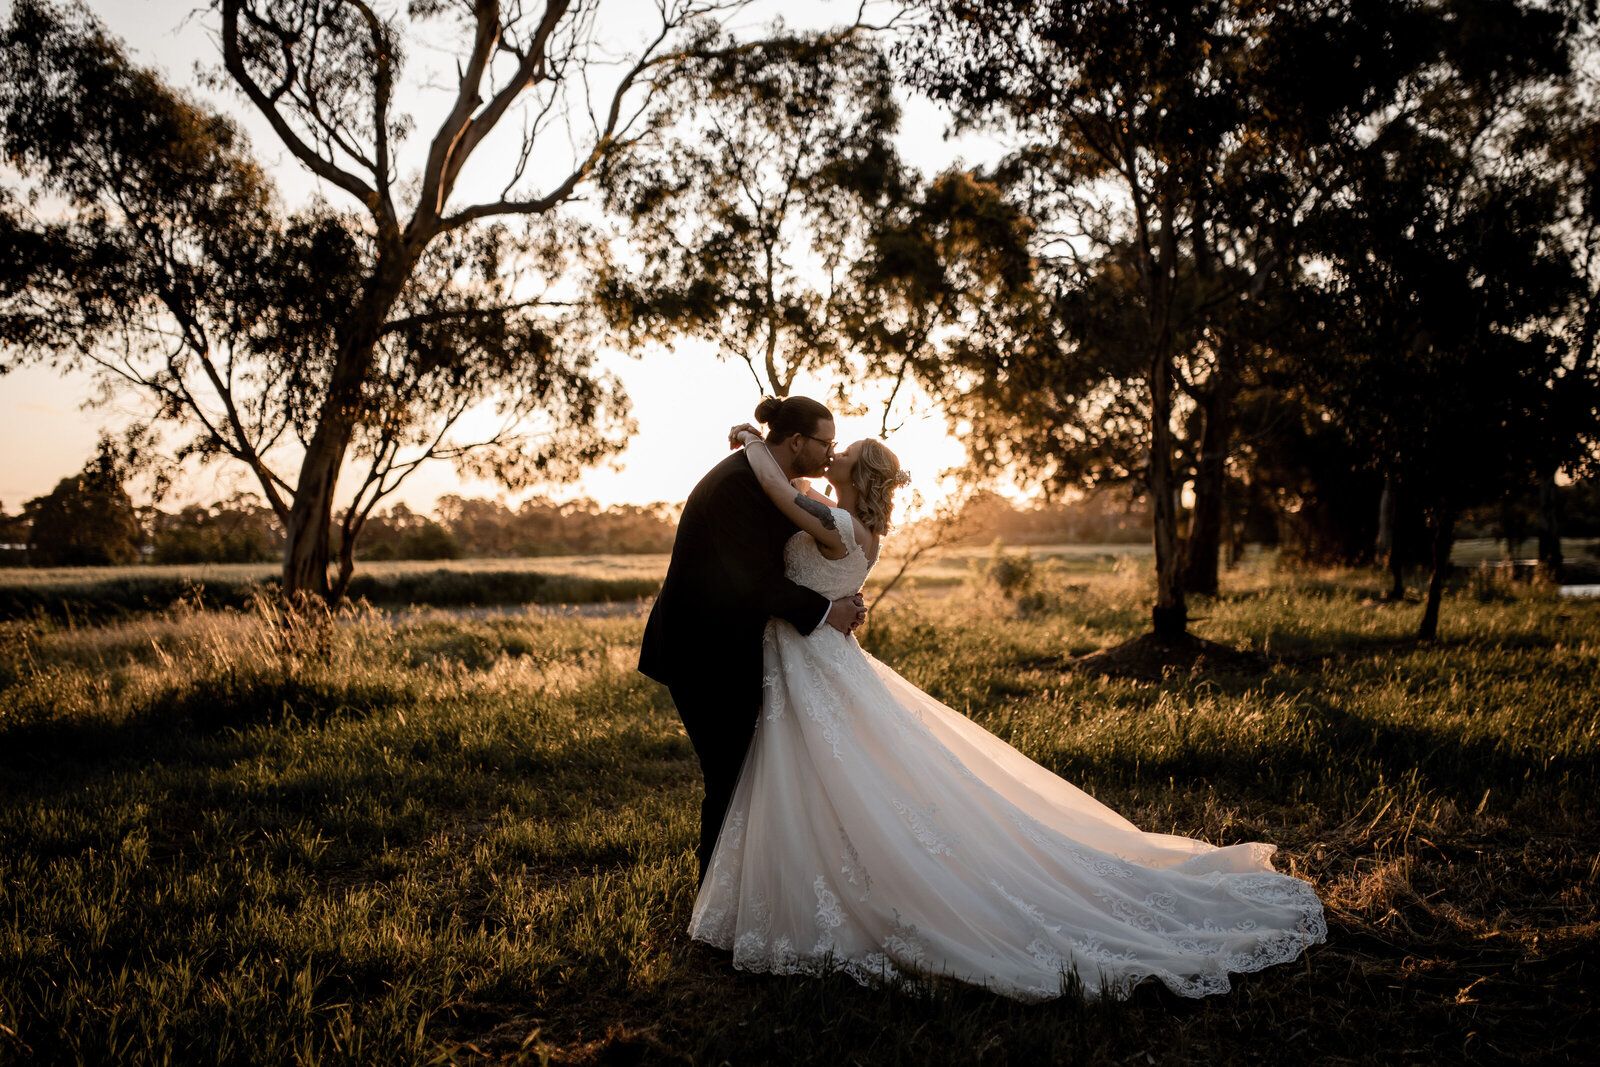 Maxine-Chris-Rexvil-Photography-Adelaide-Wedding-Photographer-659